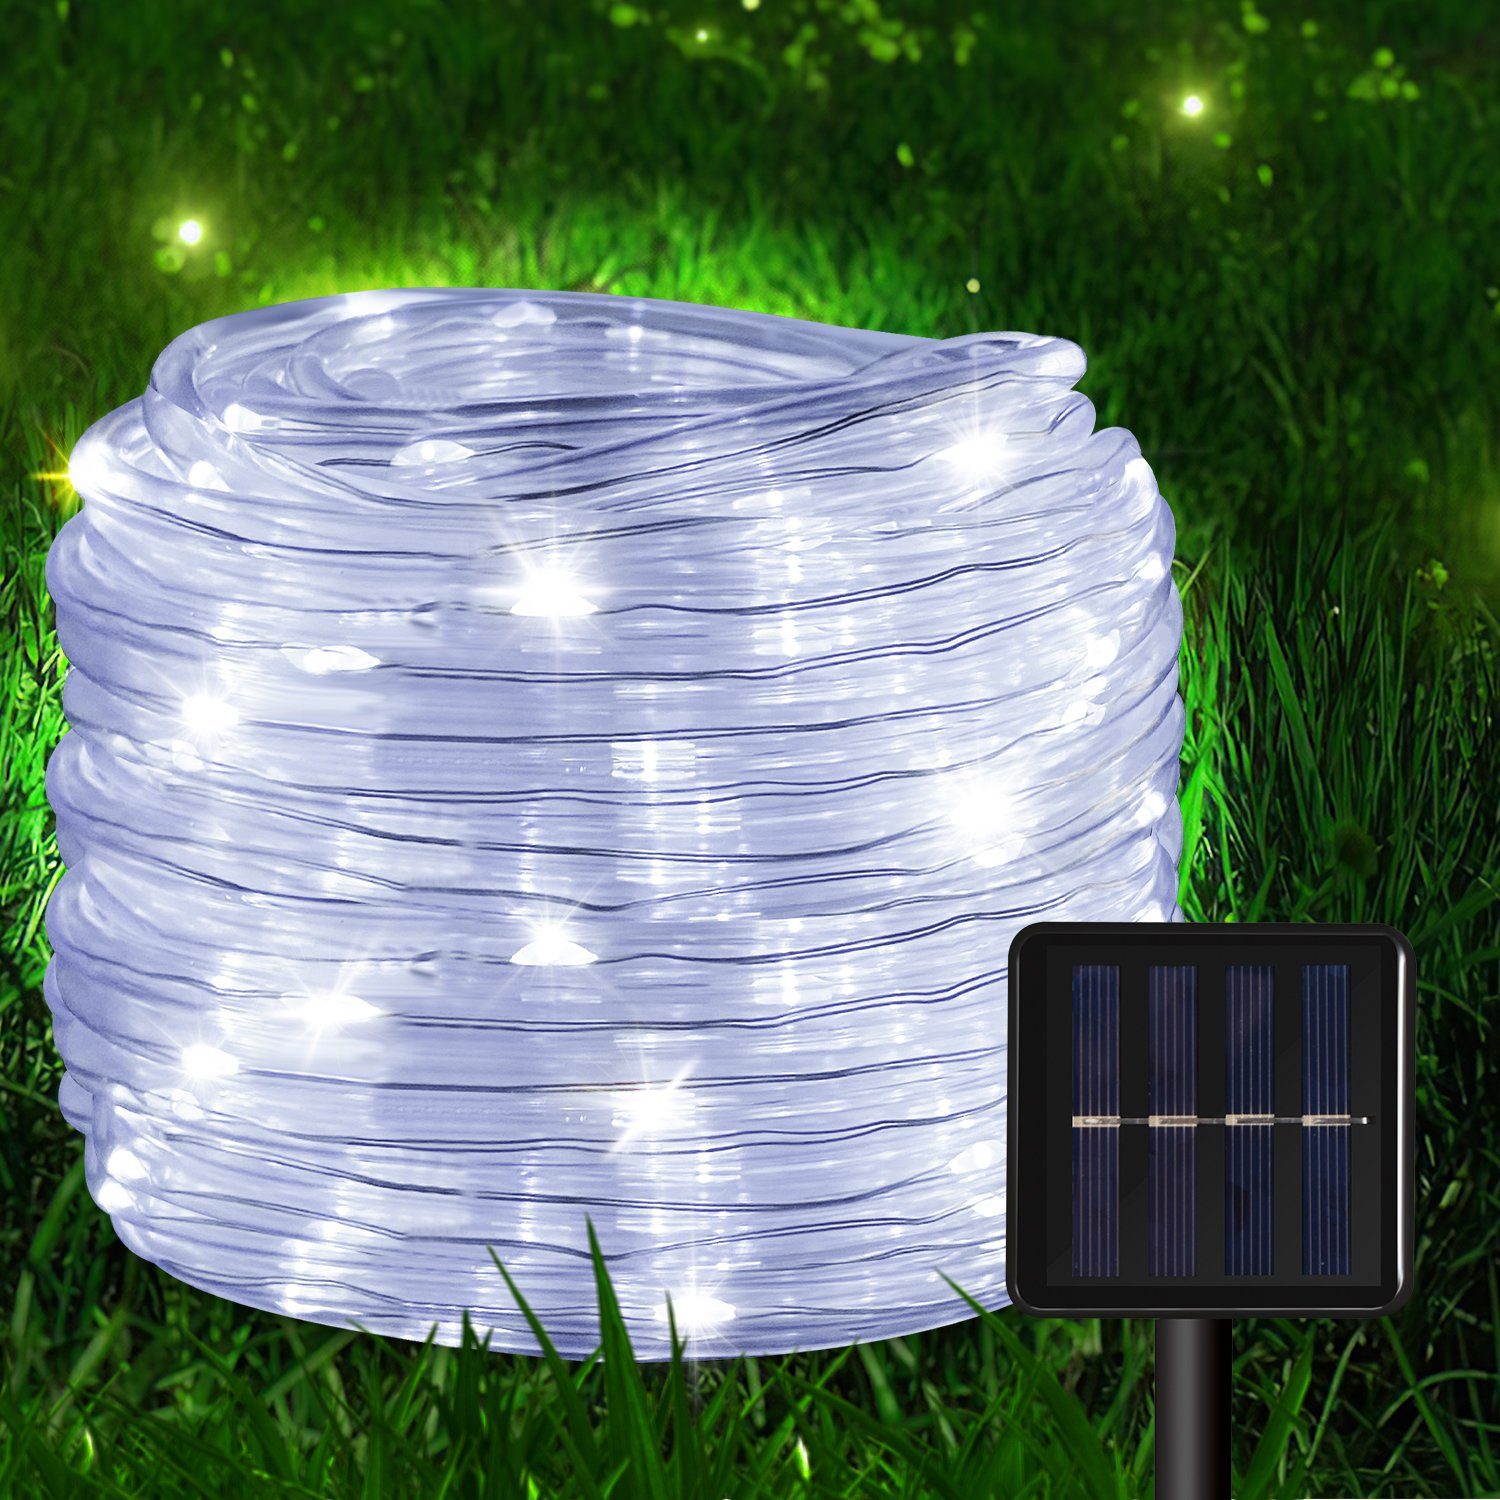 Gimisgu Solar LED Kaltweiß 20m Wasserdicht Lichterkette Lichterschlauch Lichtschlauch LED-Lichterschlauch